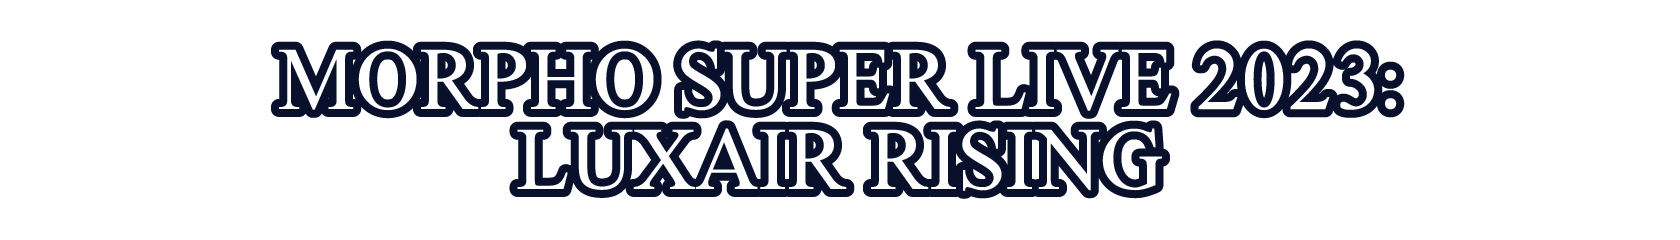 MORPHO SUPER LIVE 2023: LUXAIR RISING